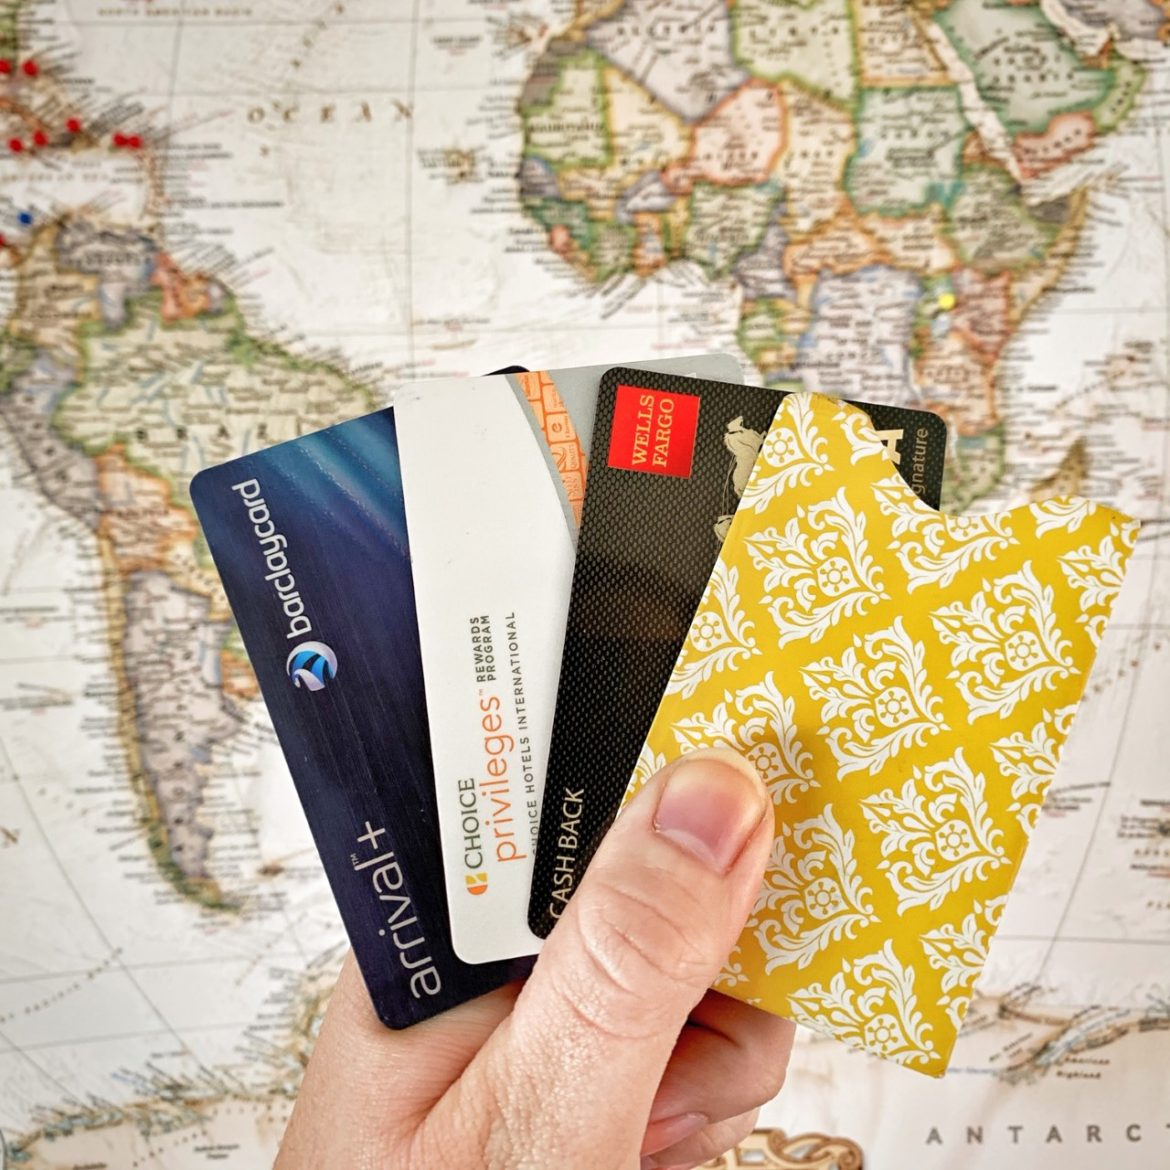 travel rewards credit card information